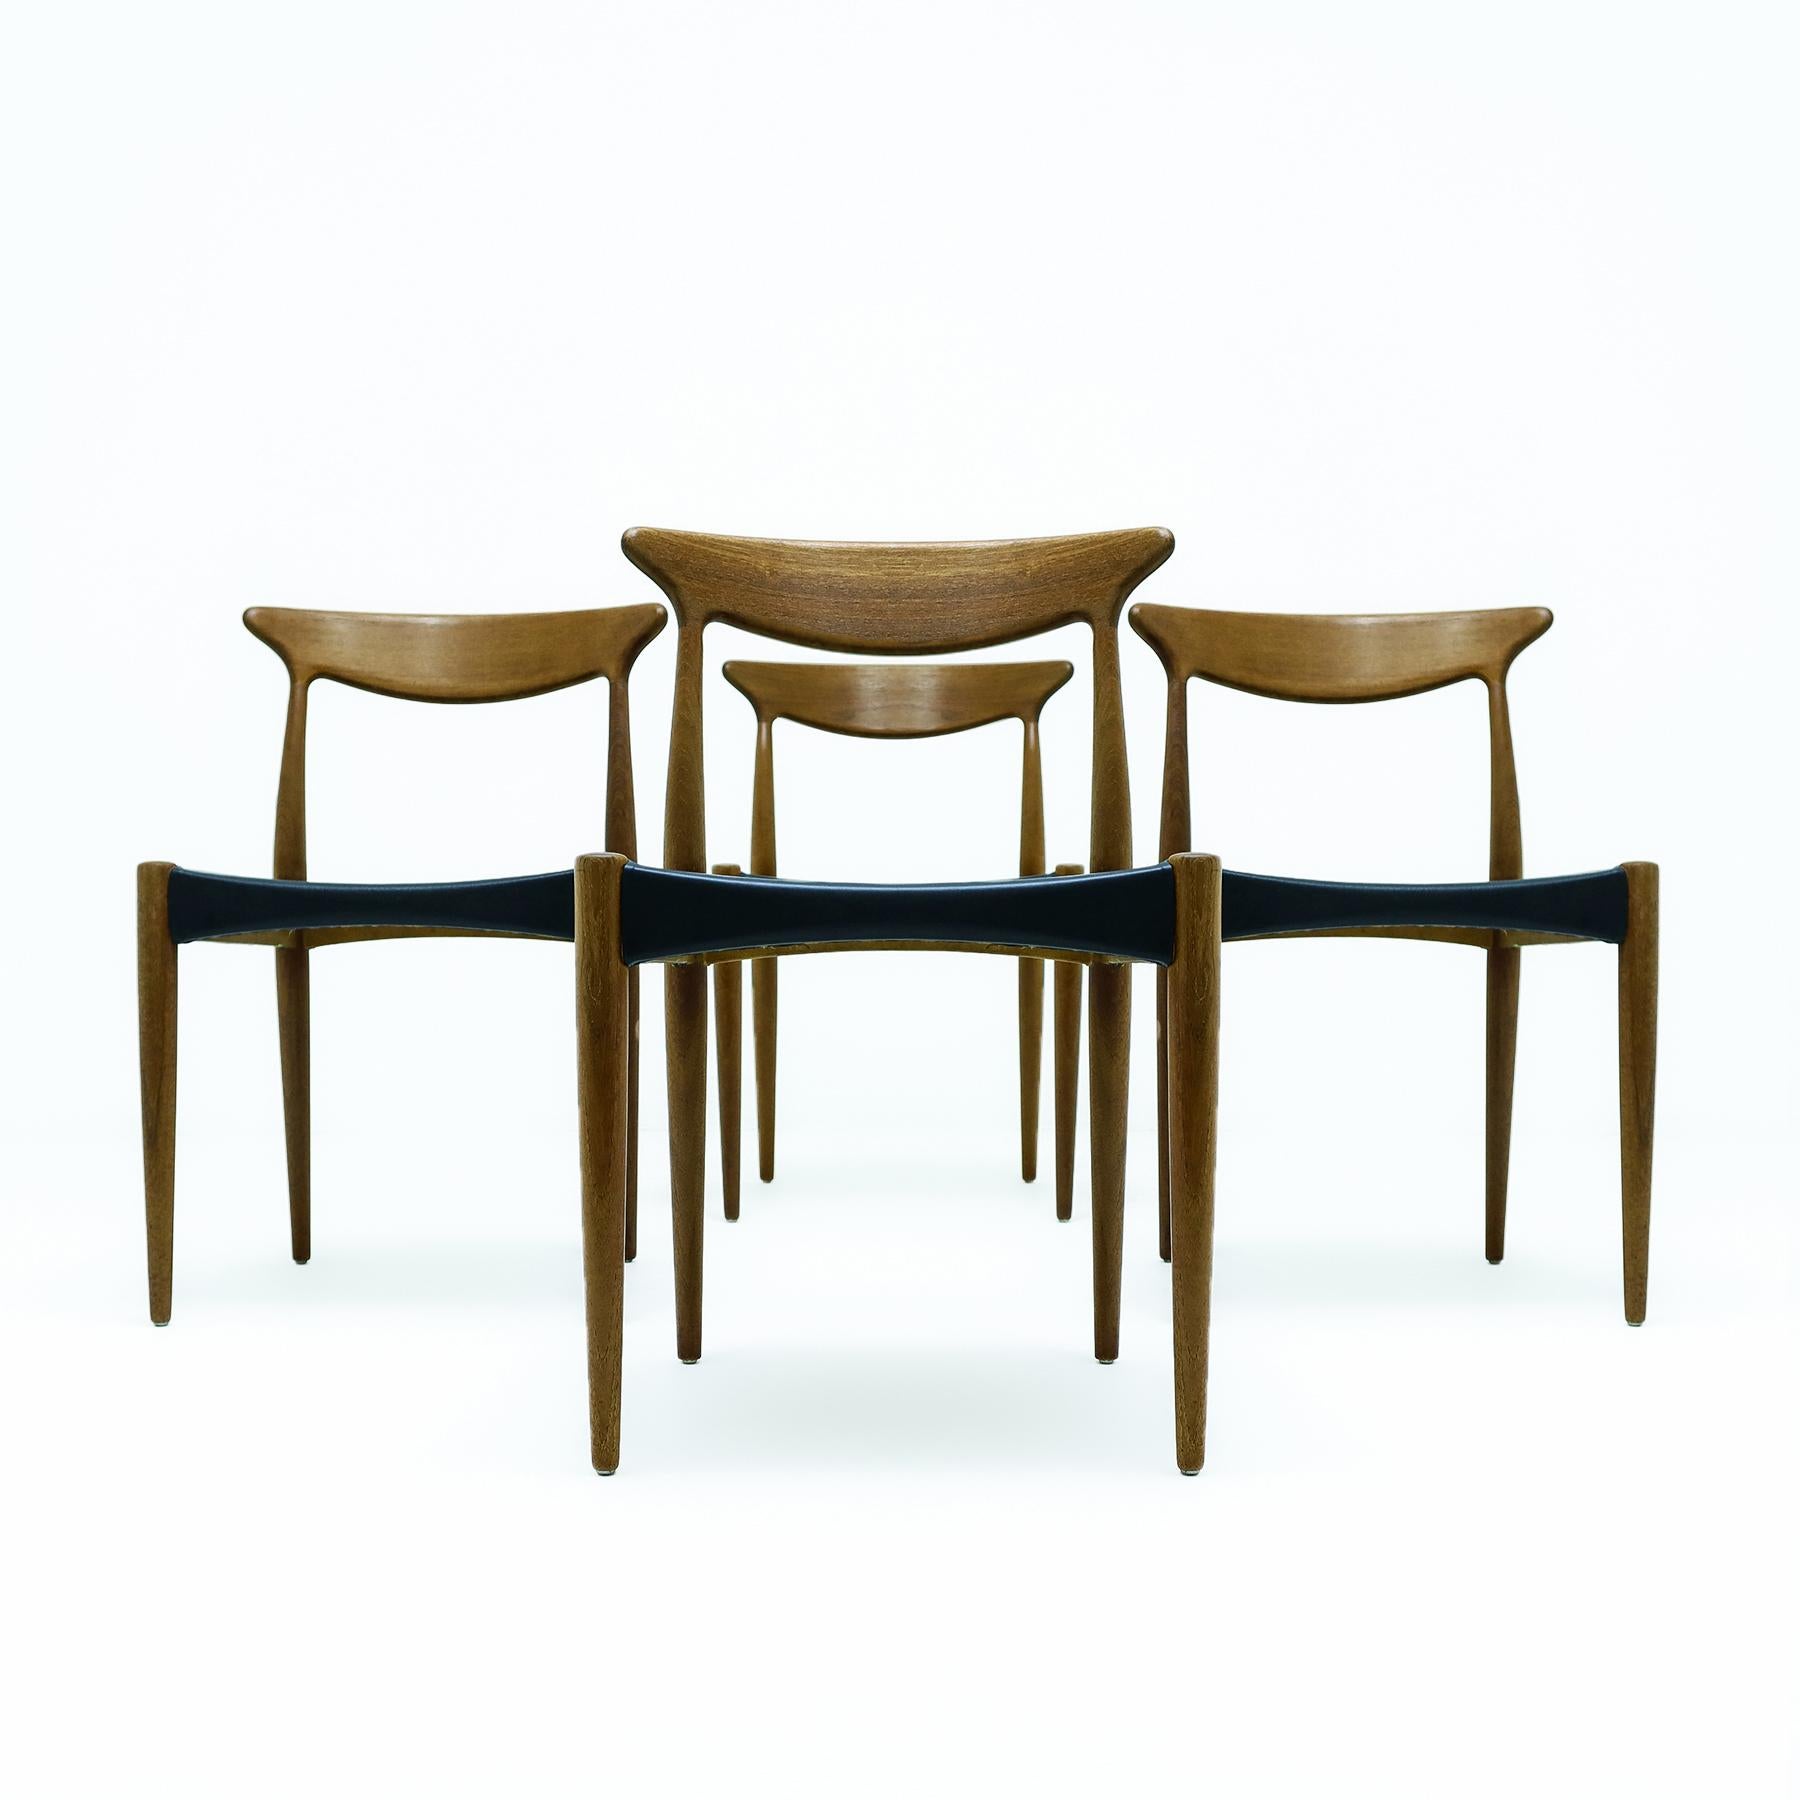 A beautifully sculptural set of 4 Vintage Danish Mid Century Arne Hovmand-Olsen MK310 teak dining chairs with original black vinyl upholstery for Mogens Kold, 1950s.

Originally designed by Olsen in 1951 and manufactured by Mogens Kold, Denmark,